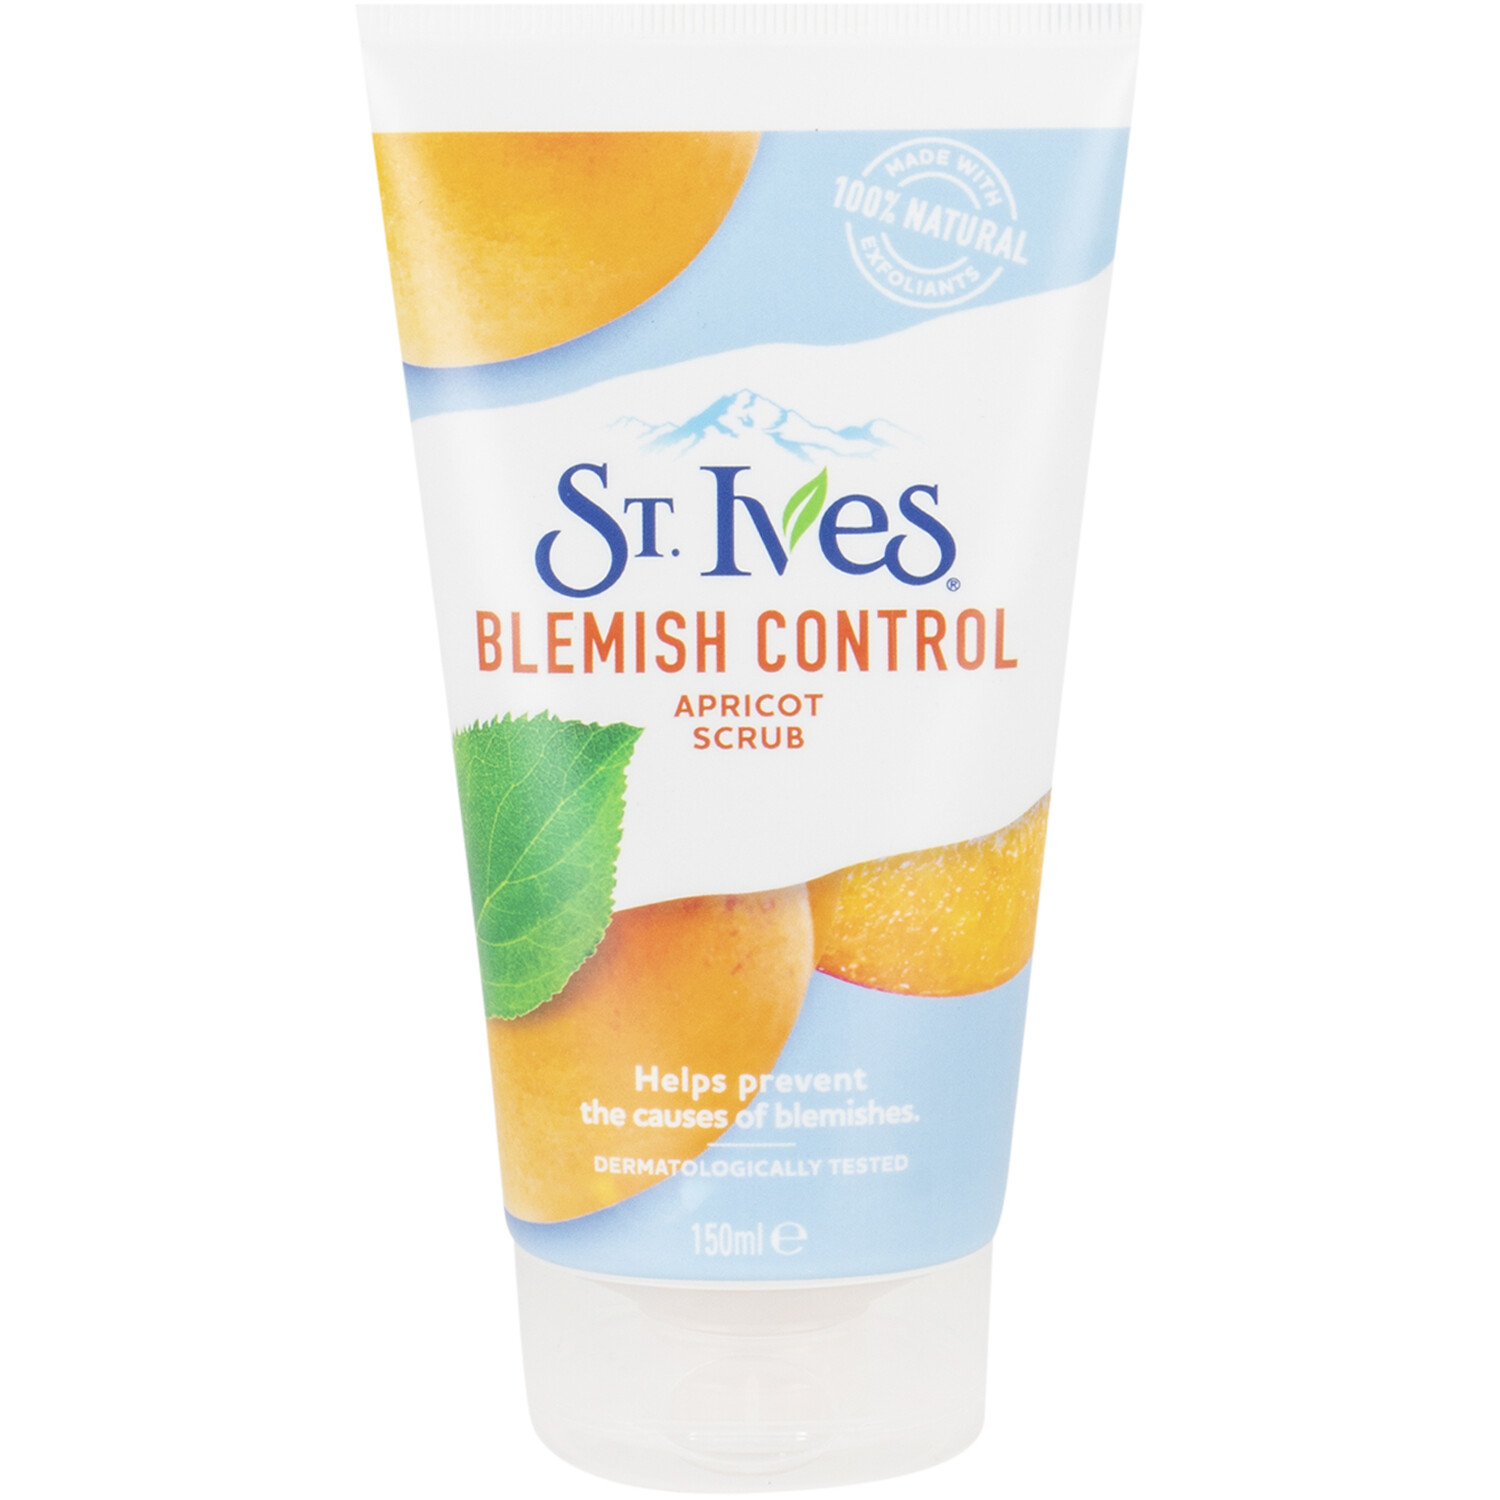 St. Ives Blemish Control Apricot Scrub Image